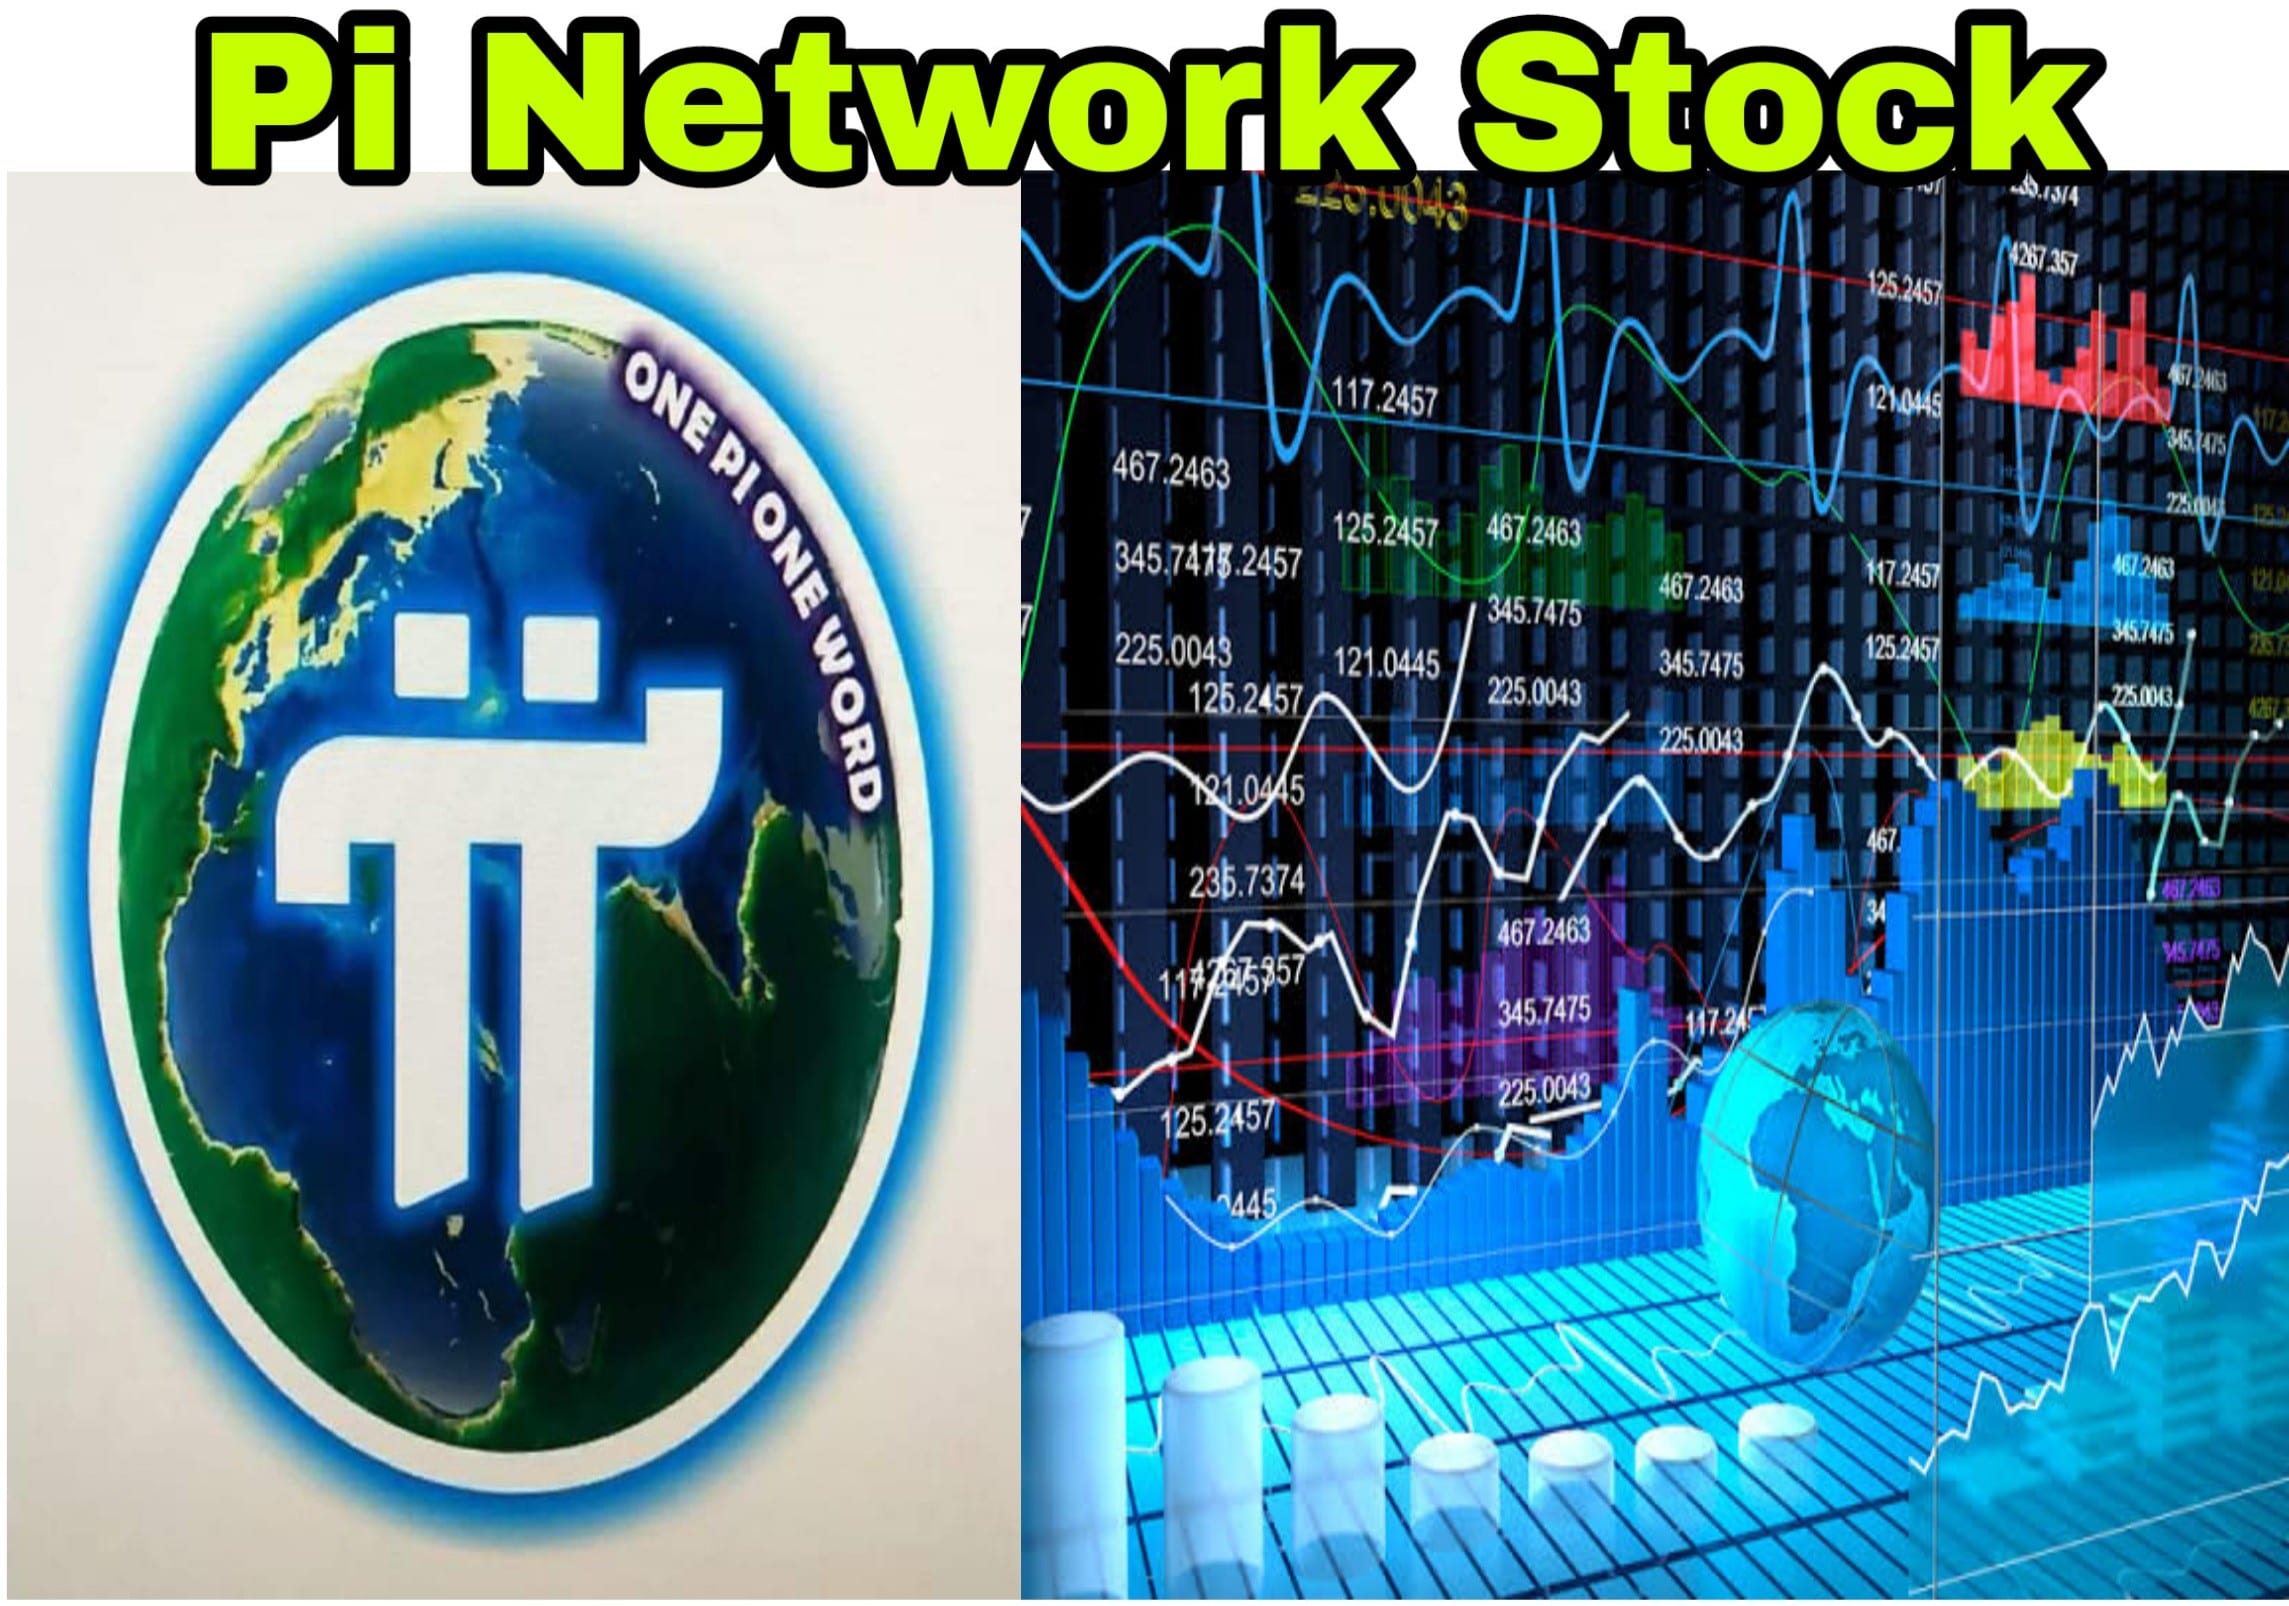 Pi Network Stock